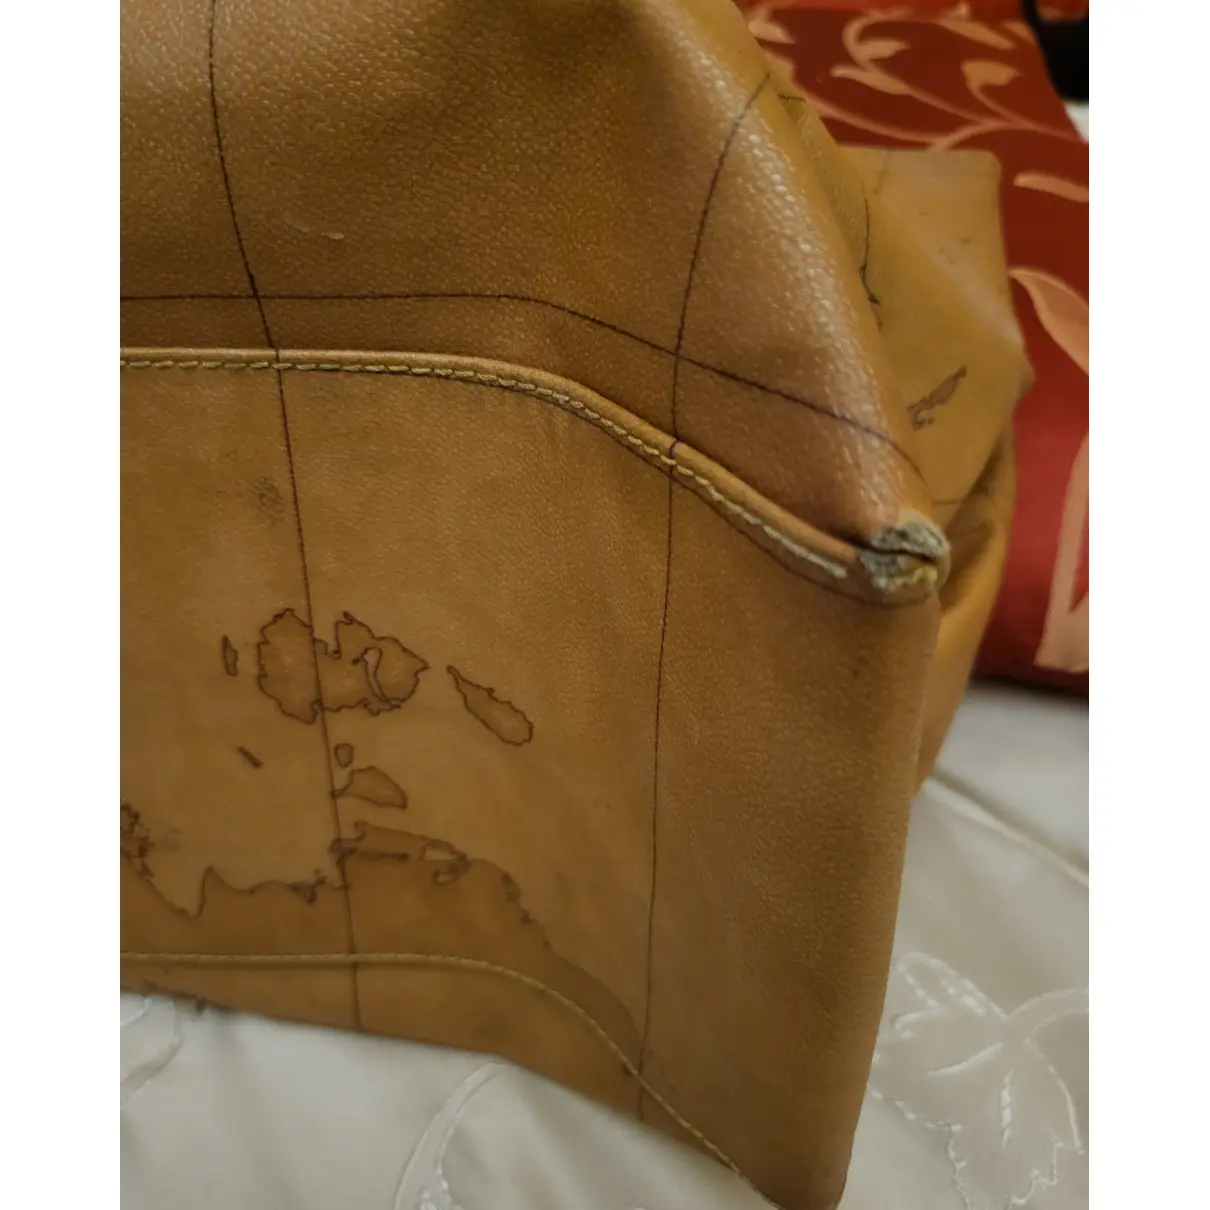 Leather handbag ALVIERO MARTINI